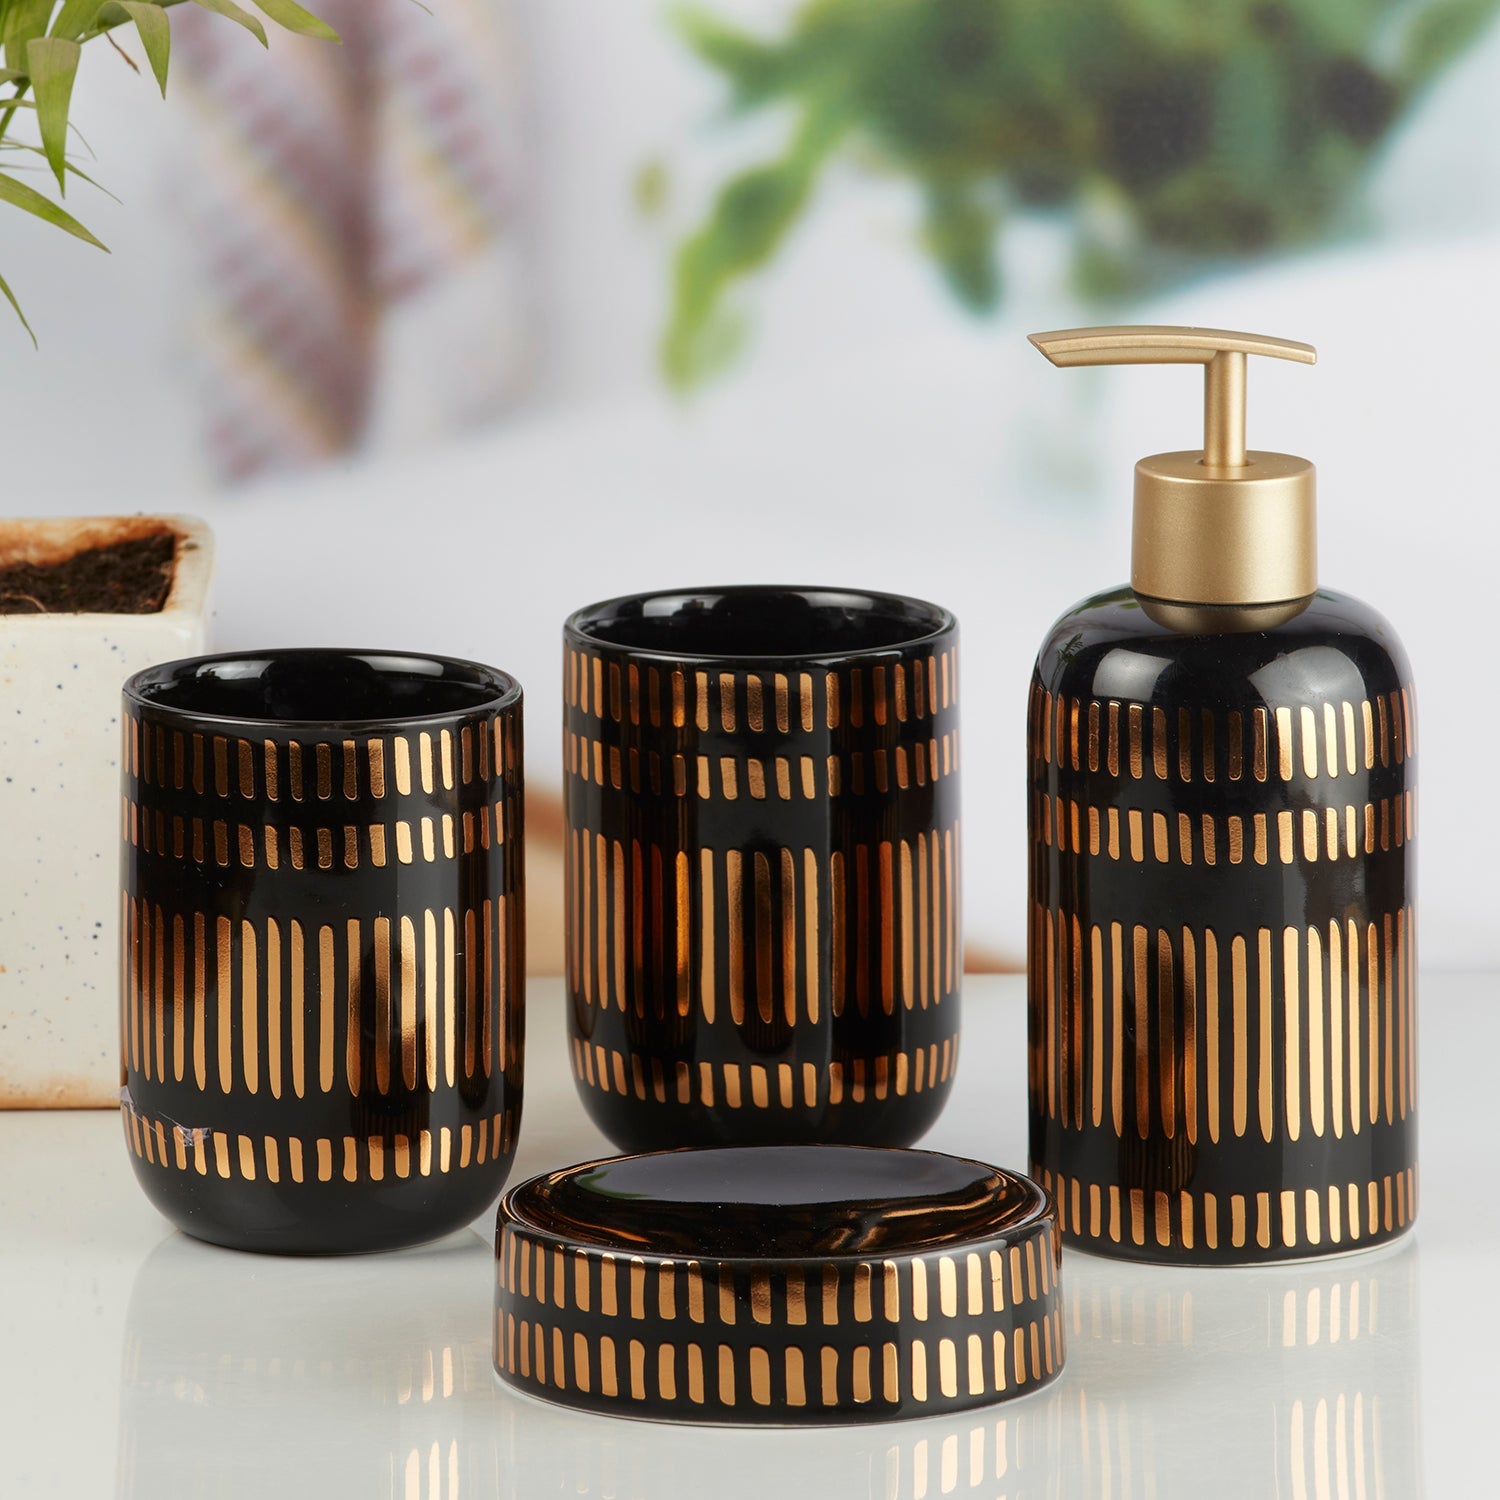 Ceramic Bathroom Accessories Set of 4 Bath Set with Soap Dispenser (10071)